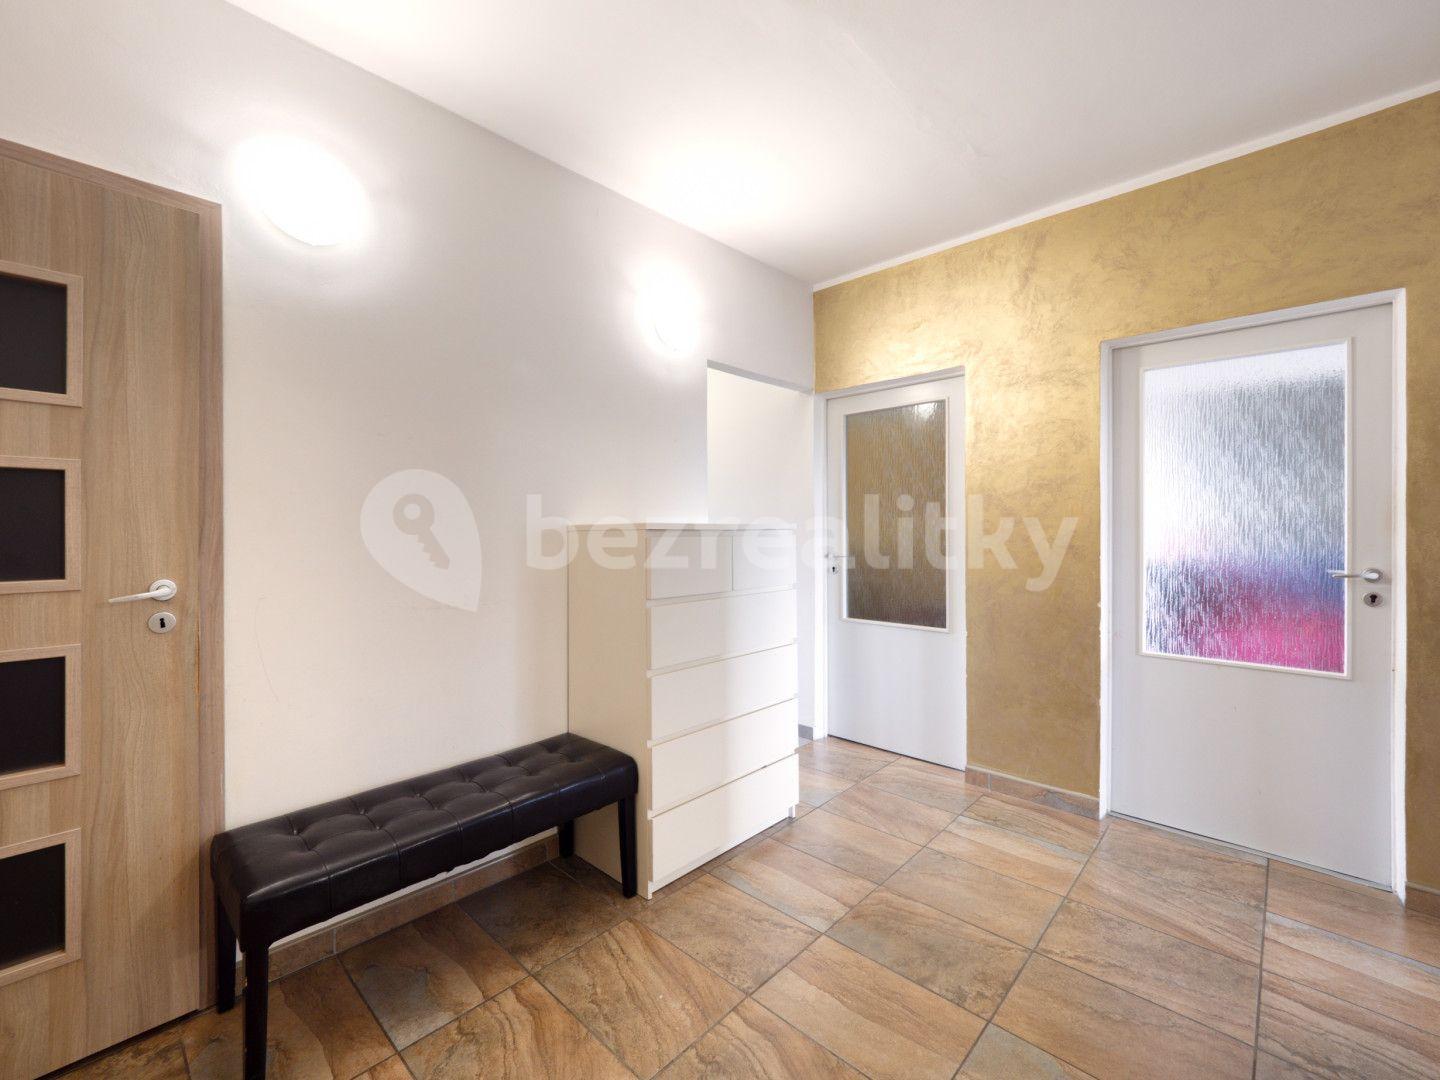 3 bedroom flat for sale, 80 m², Kamenická, Děčín, Ústecký Region